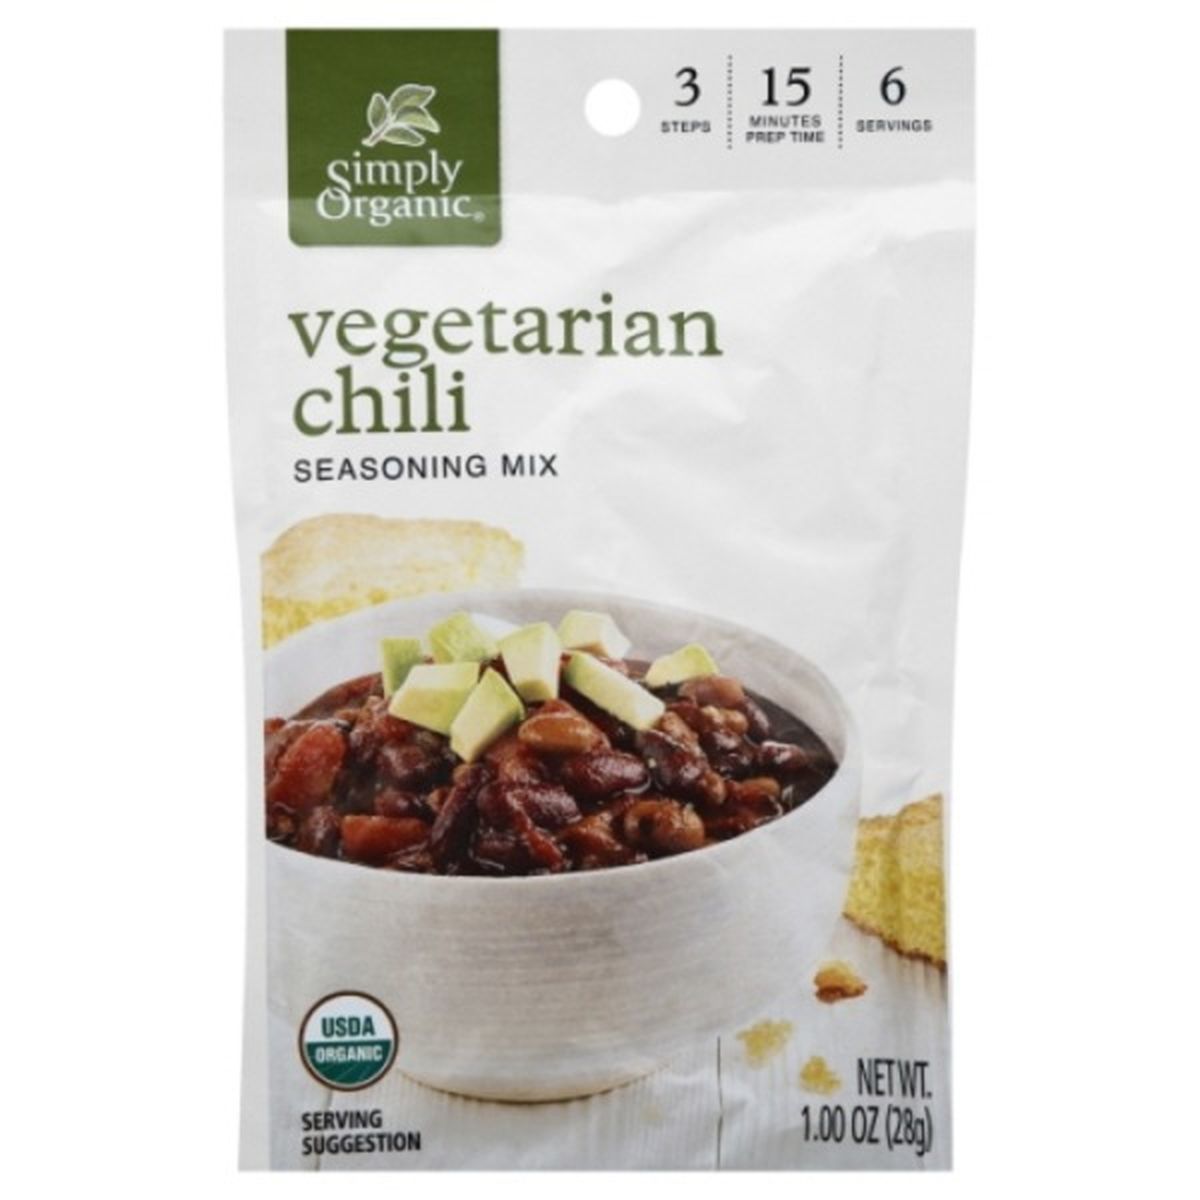 Calories in Simply Organic Seasoning Mix, Vegetarian Chili